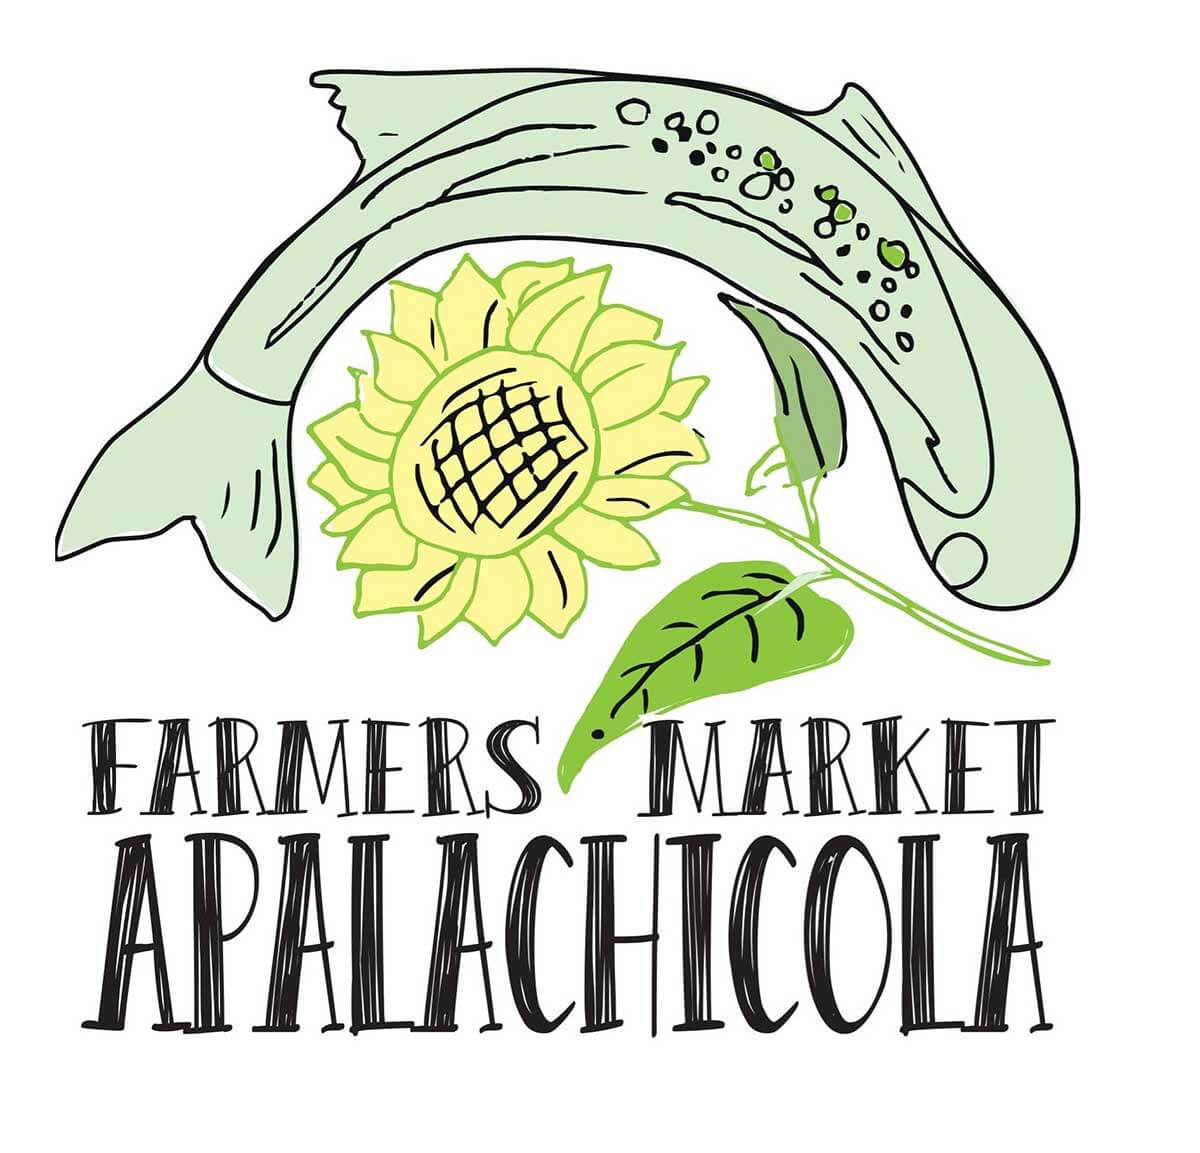 Apalachicola Farmers Market Promotional Flyer